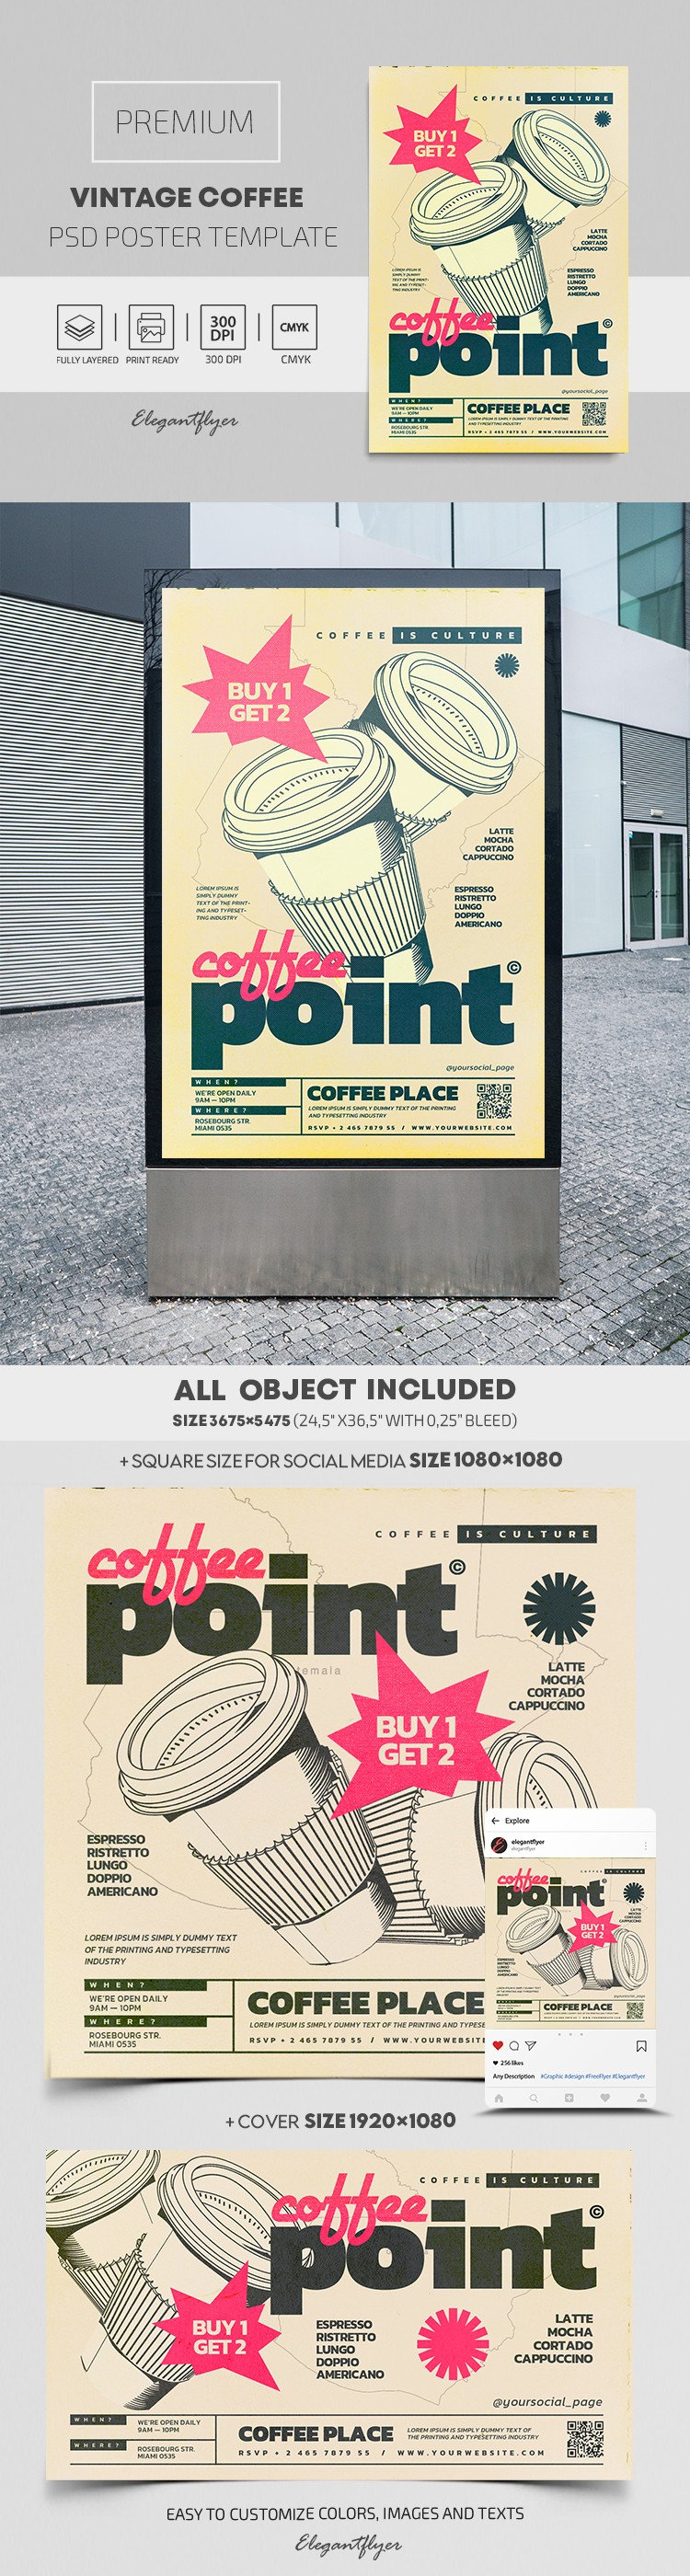 Vintage Coffee Poster by ElegantFlyer